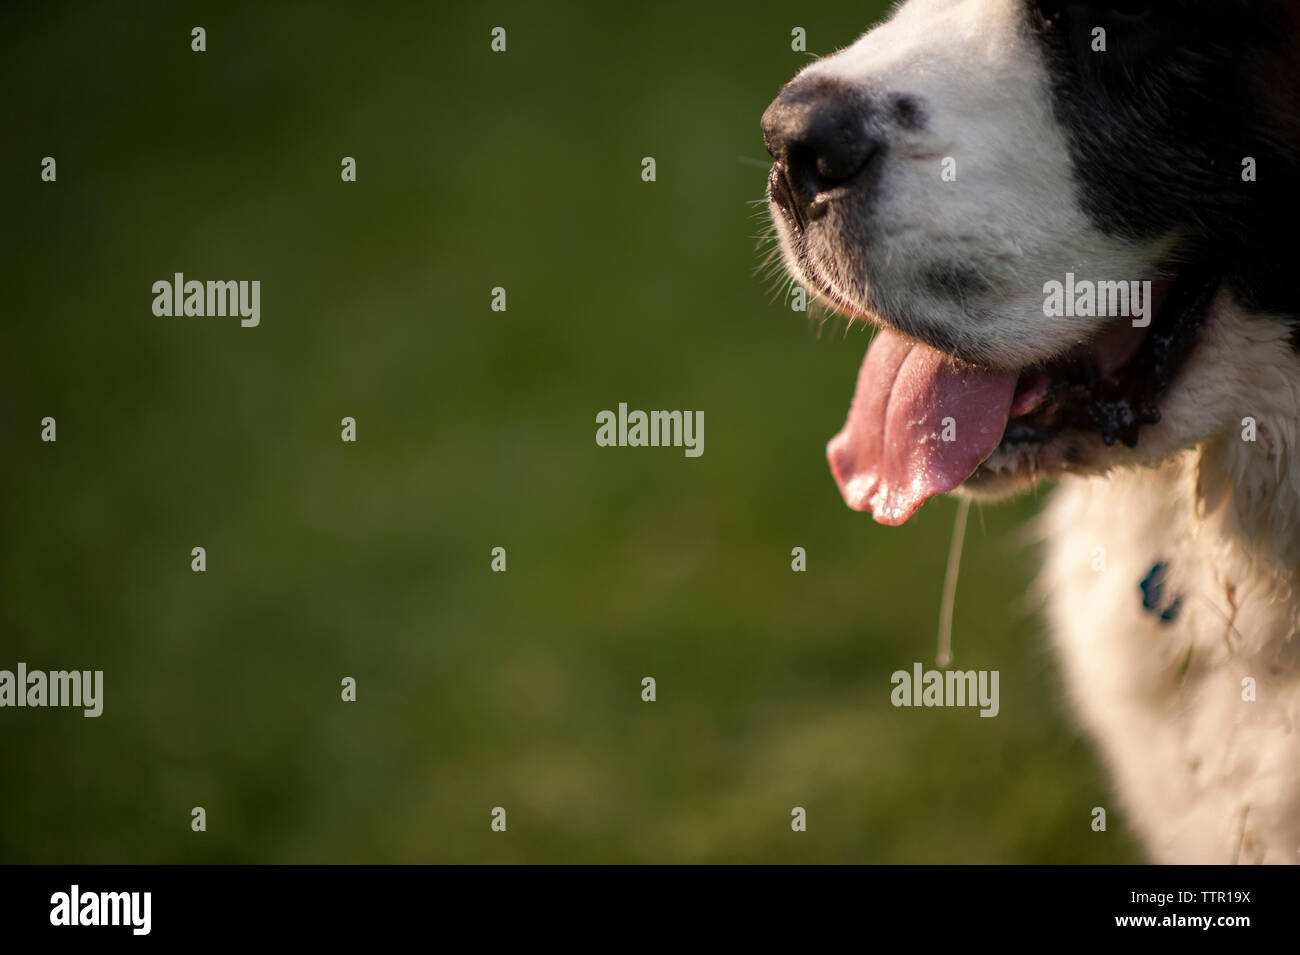 Close-up of dog sticking out tongue at backyard Stock Photo